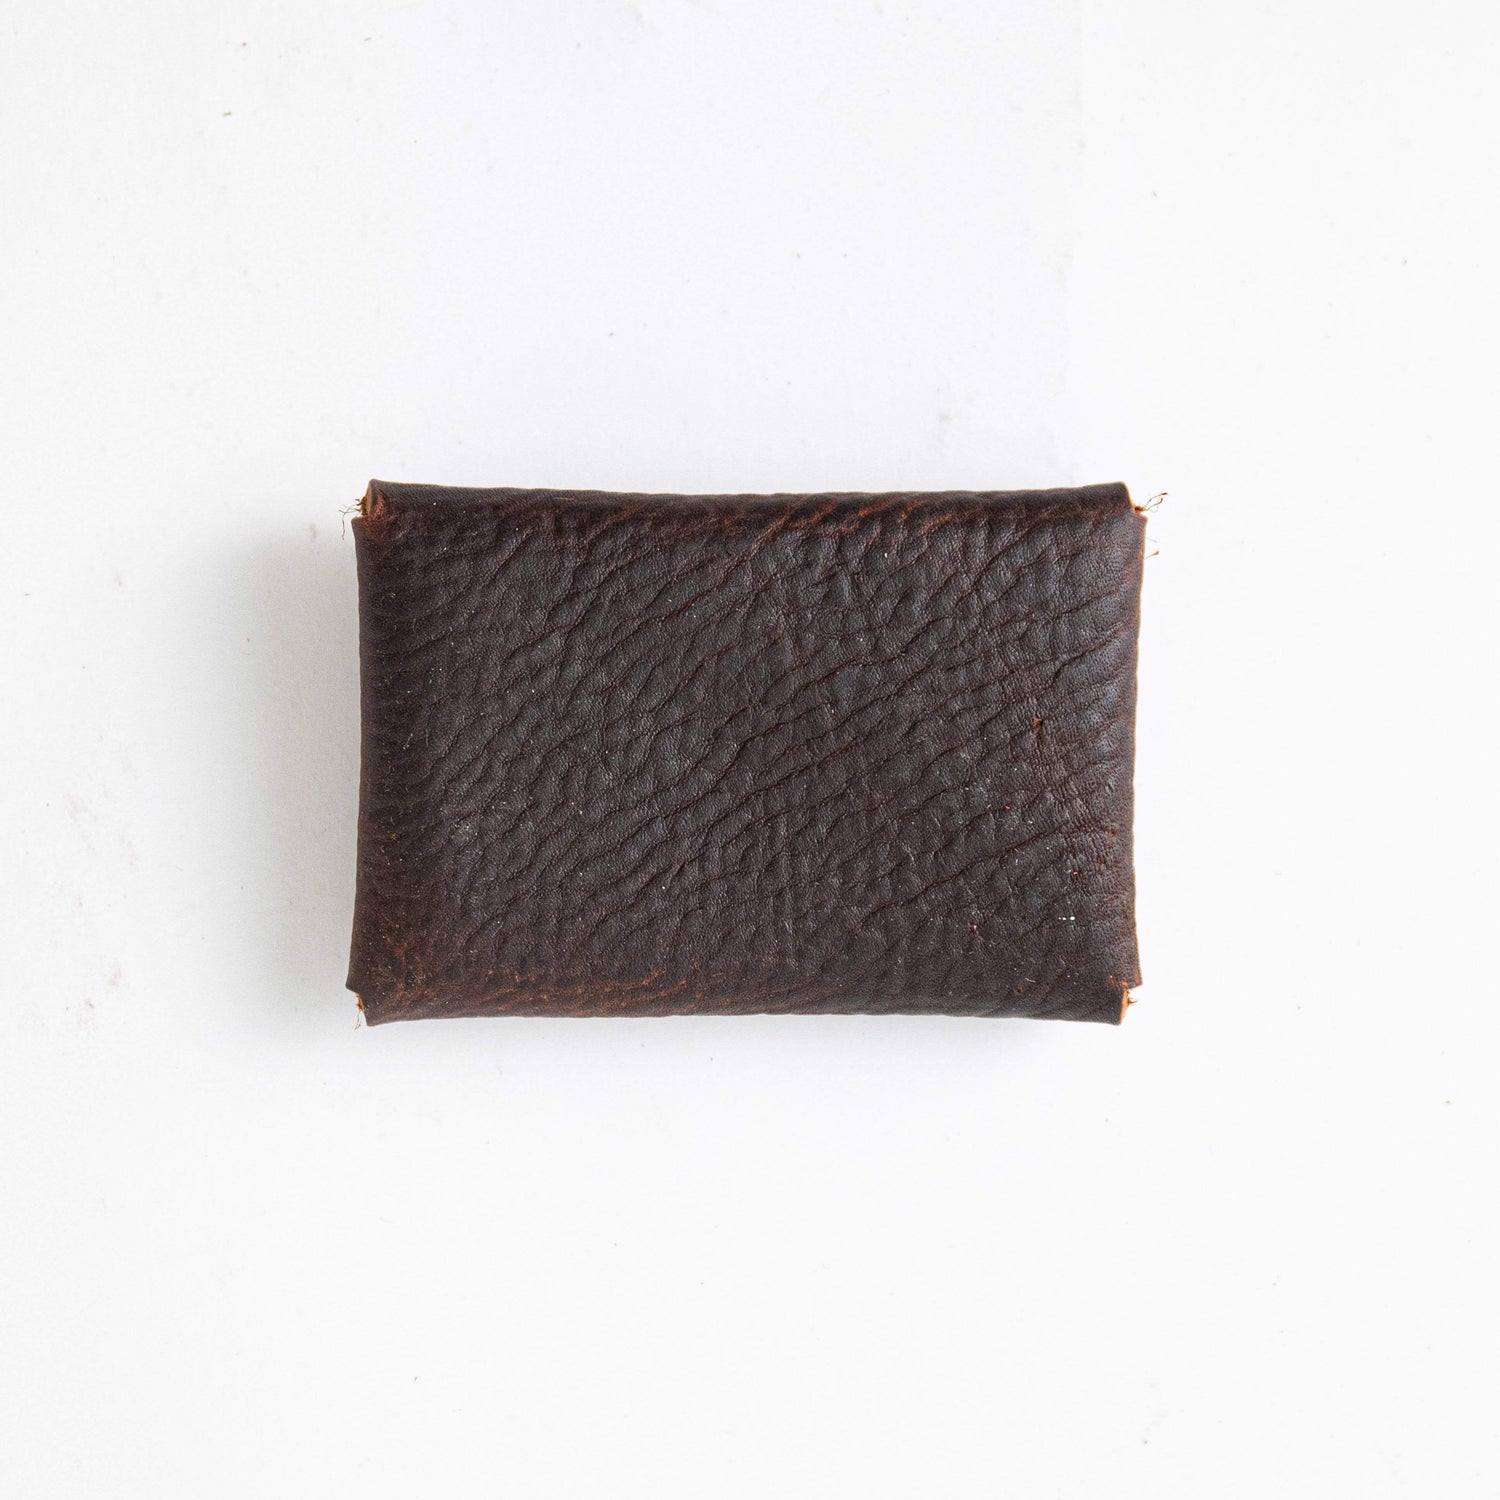 Brown Kodiak Card Envelope- card holder wallet - leather wallet made in America at KMM &amp; Co.